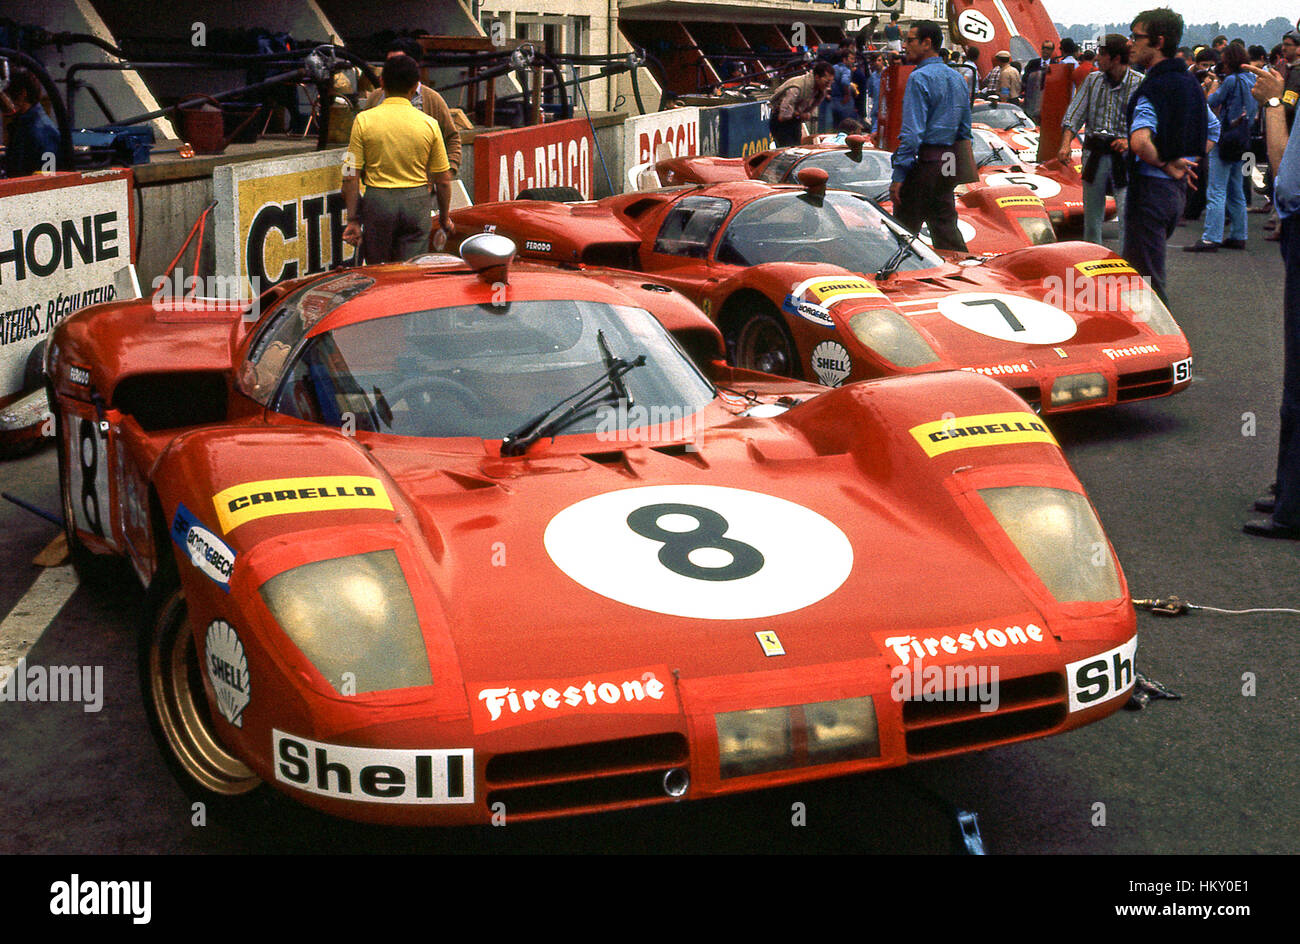 1970 Ferrari 512Ss Pits Apron Le Mans 24 Hours GG Stock Photo